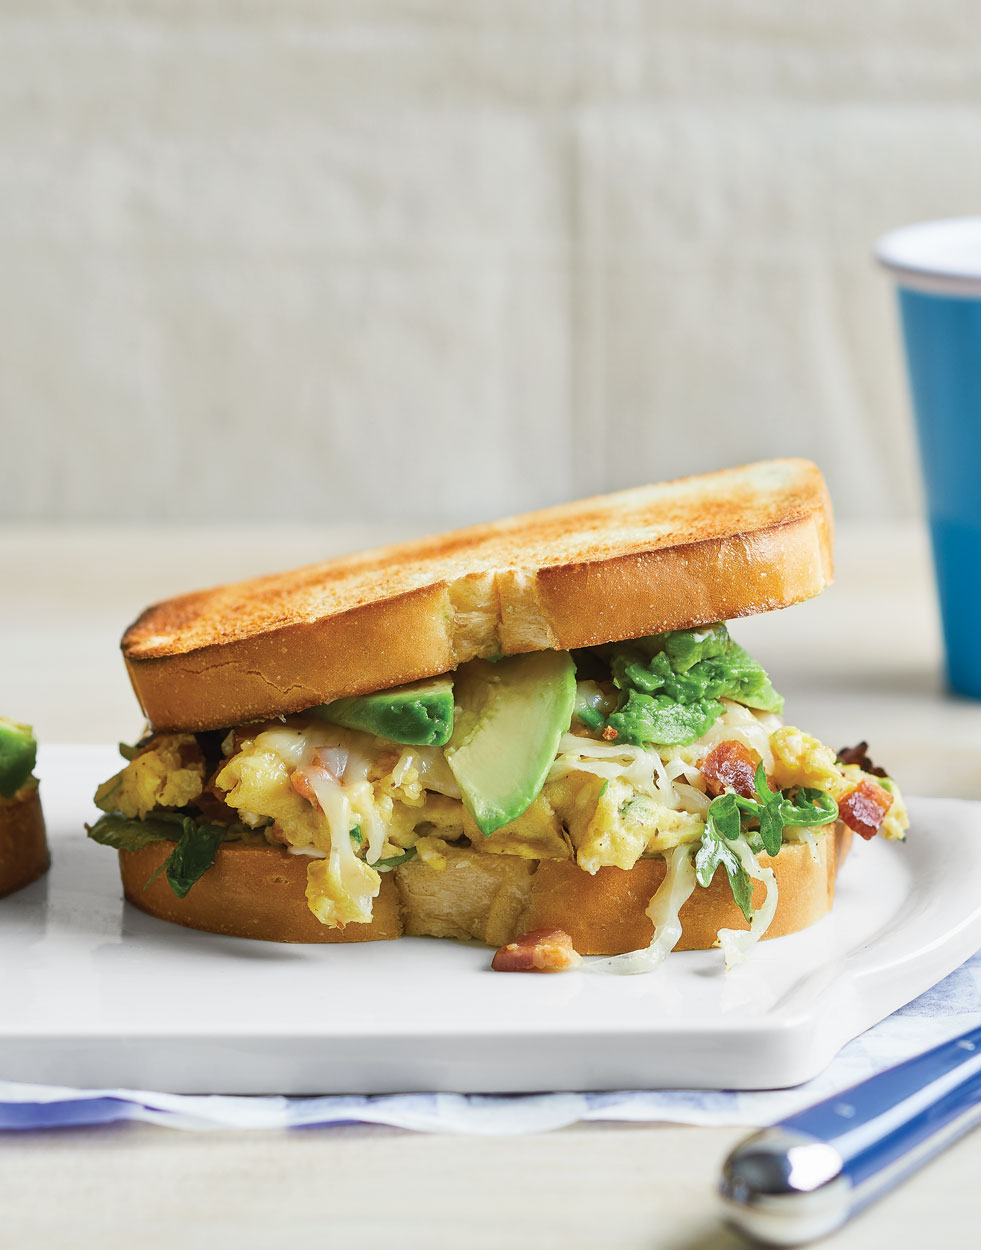 “Quiche Lorraine” Breakfast Sandwiches with avocado & mixed salad greens